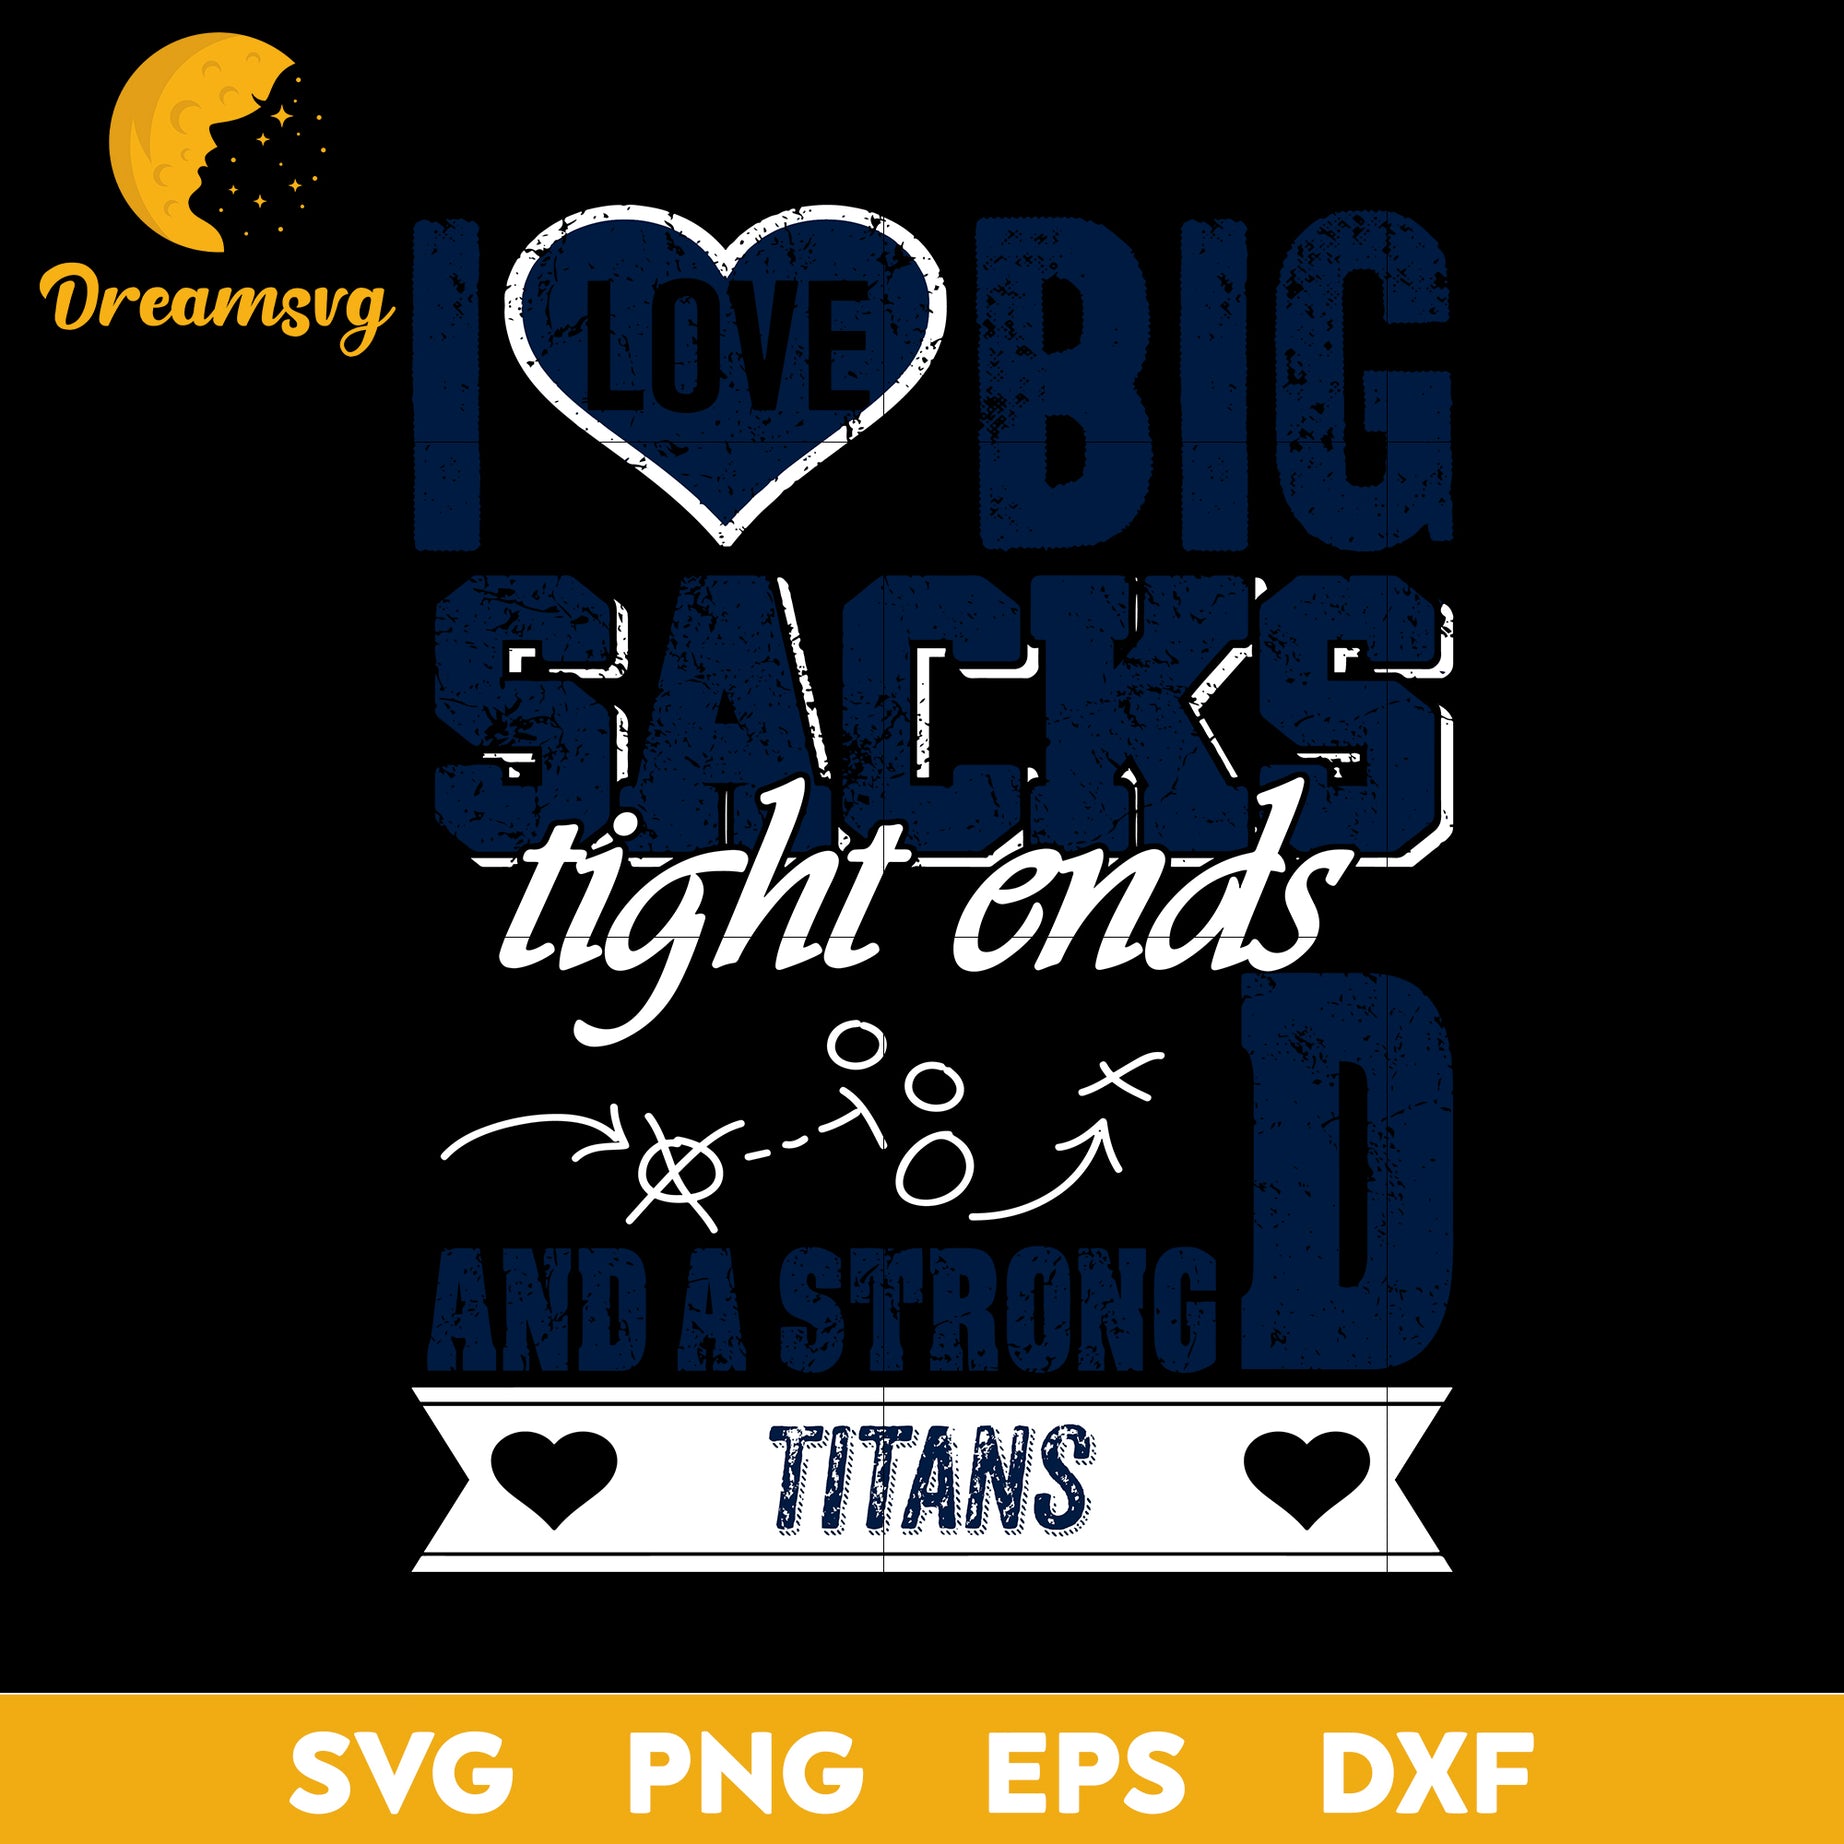 I Love Big Sacks tight ends and a strongD Tennessee Titans Svg , Nfl Svg, Png, Dxf, Eps Digital File.